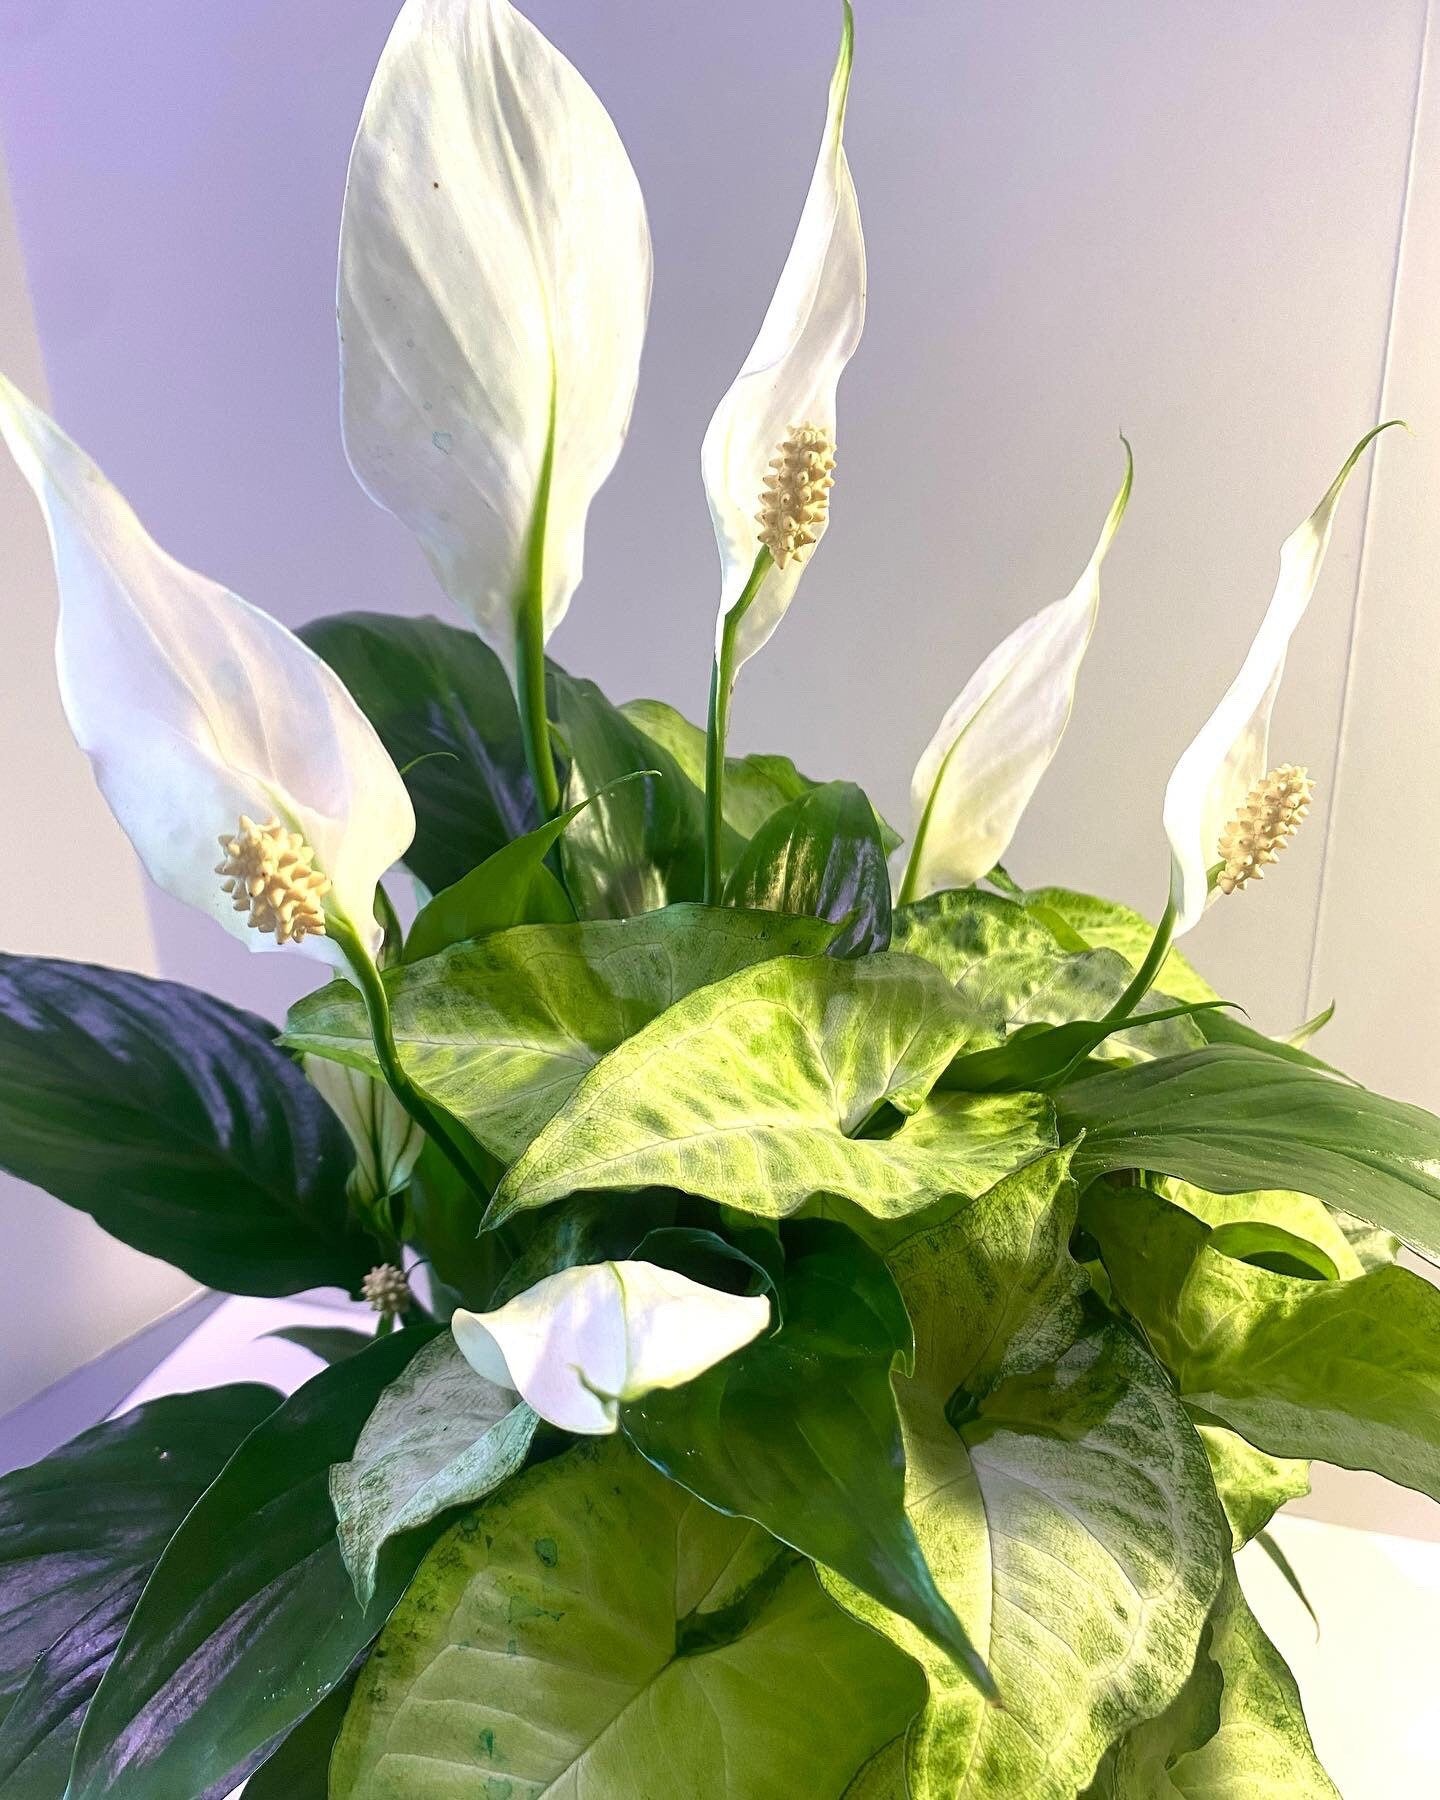 Kokedama - Large Peace Lily with Syngonium arrangement mossball art.